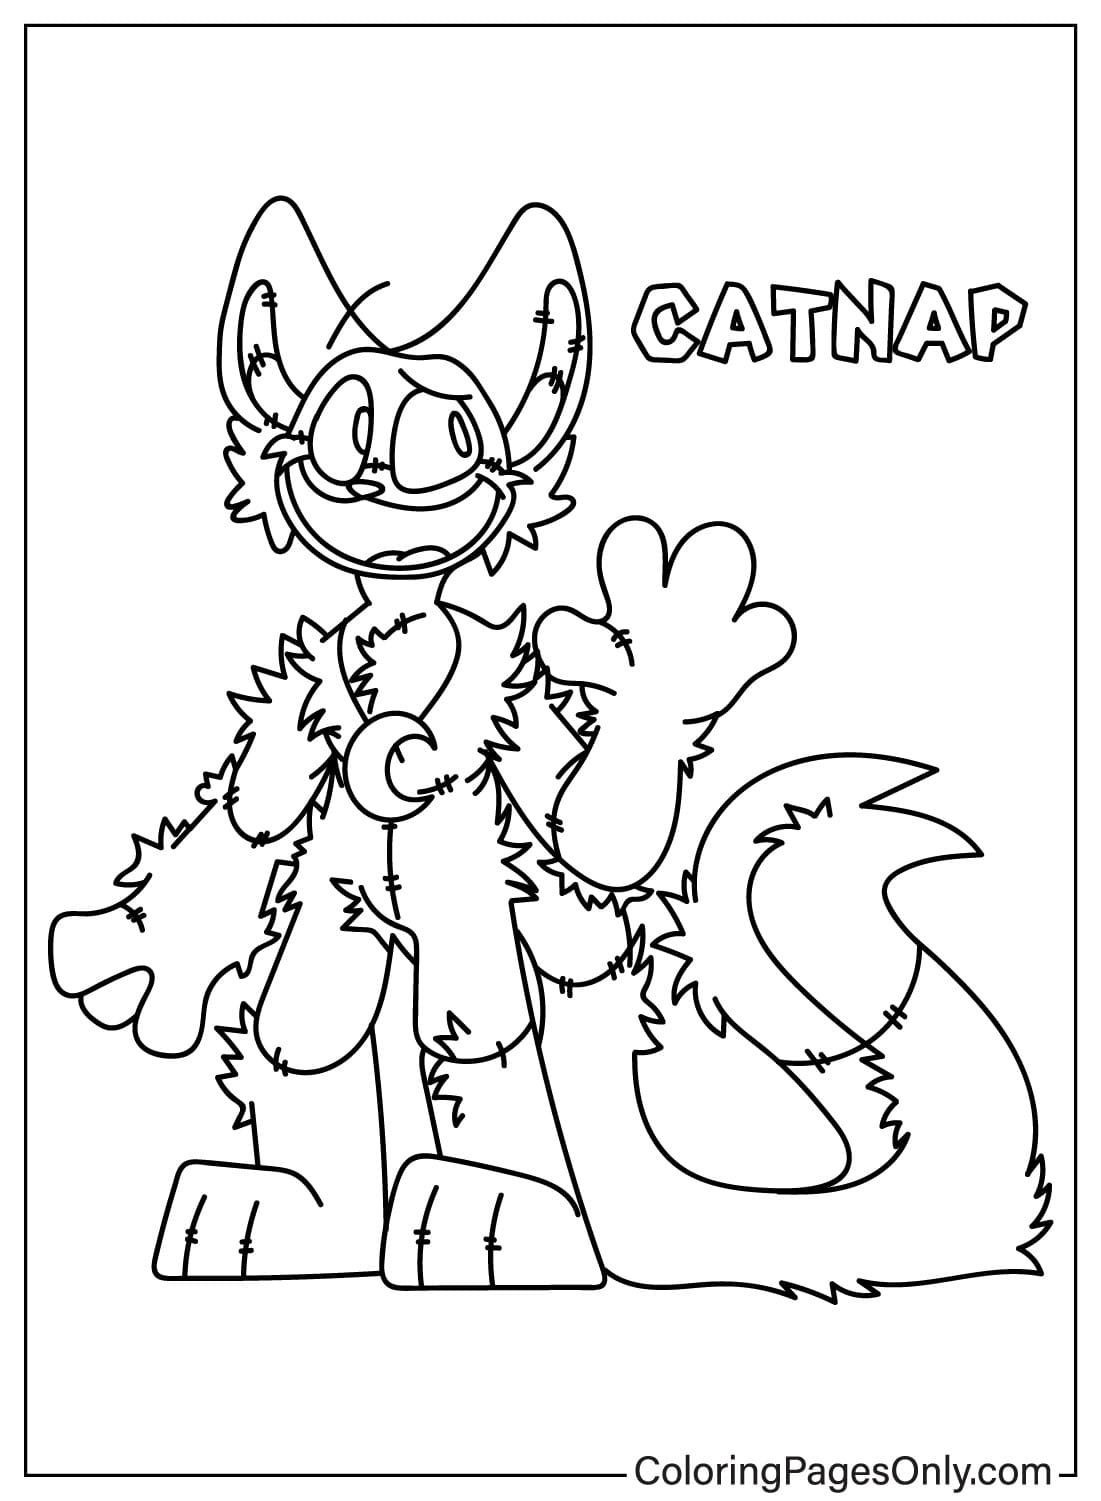 CatNap 的 CatNap 着色页